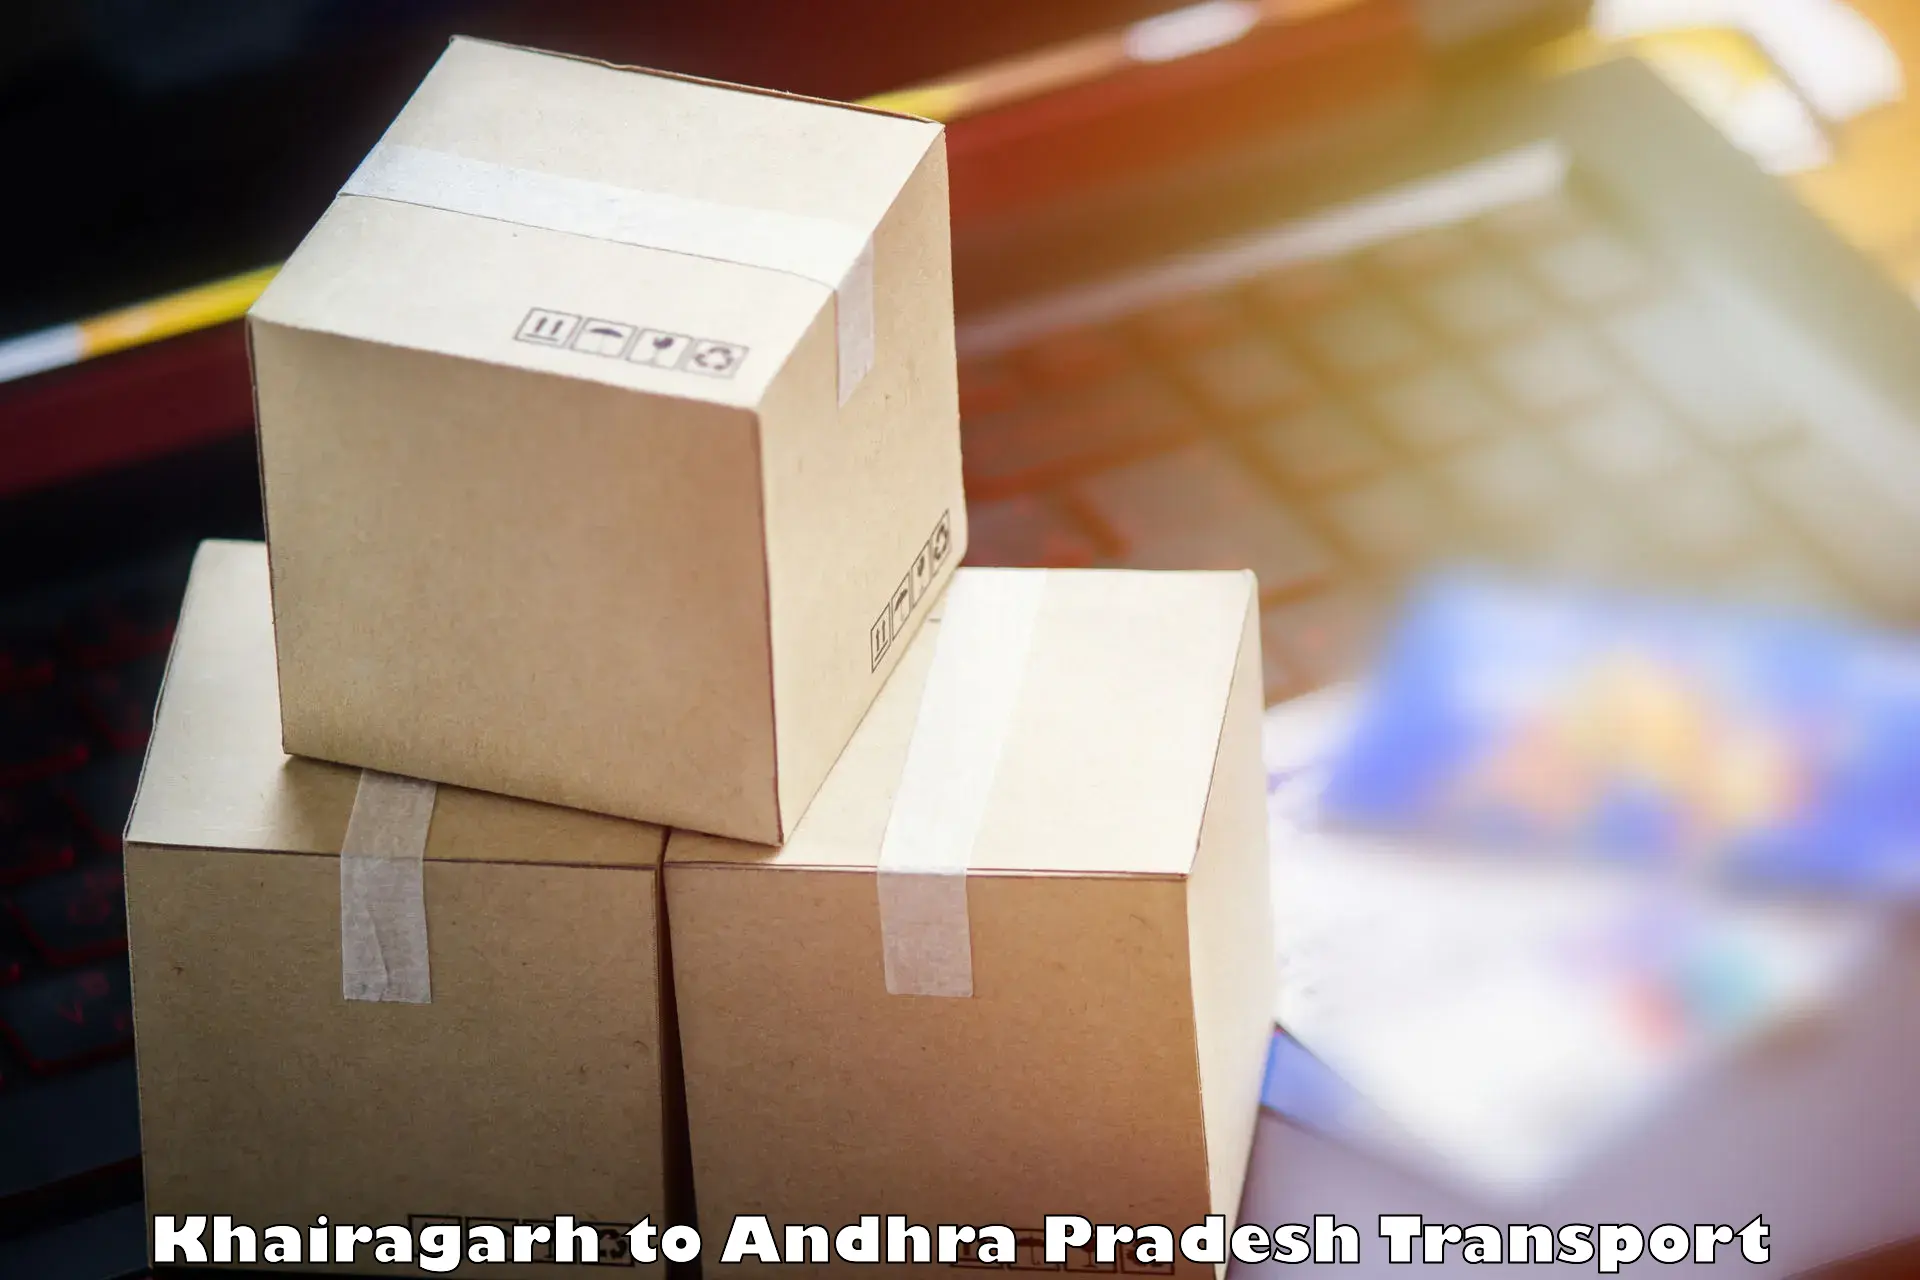 Truck transport companies in India Khairagarh to Nellore